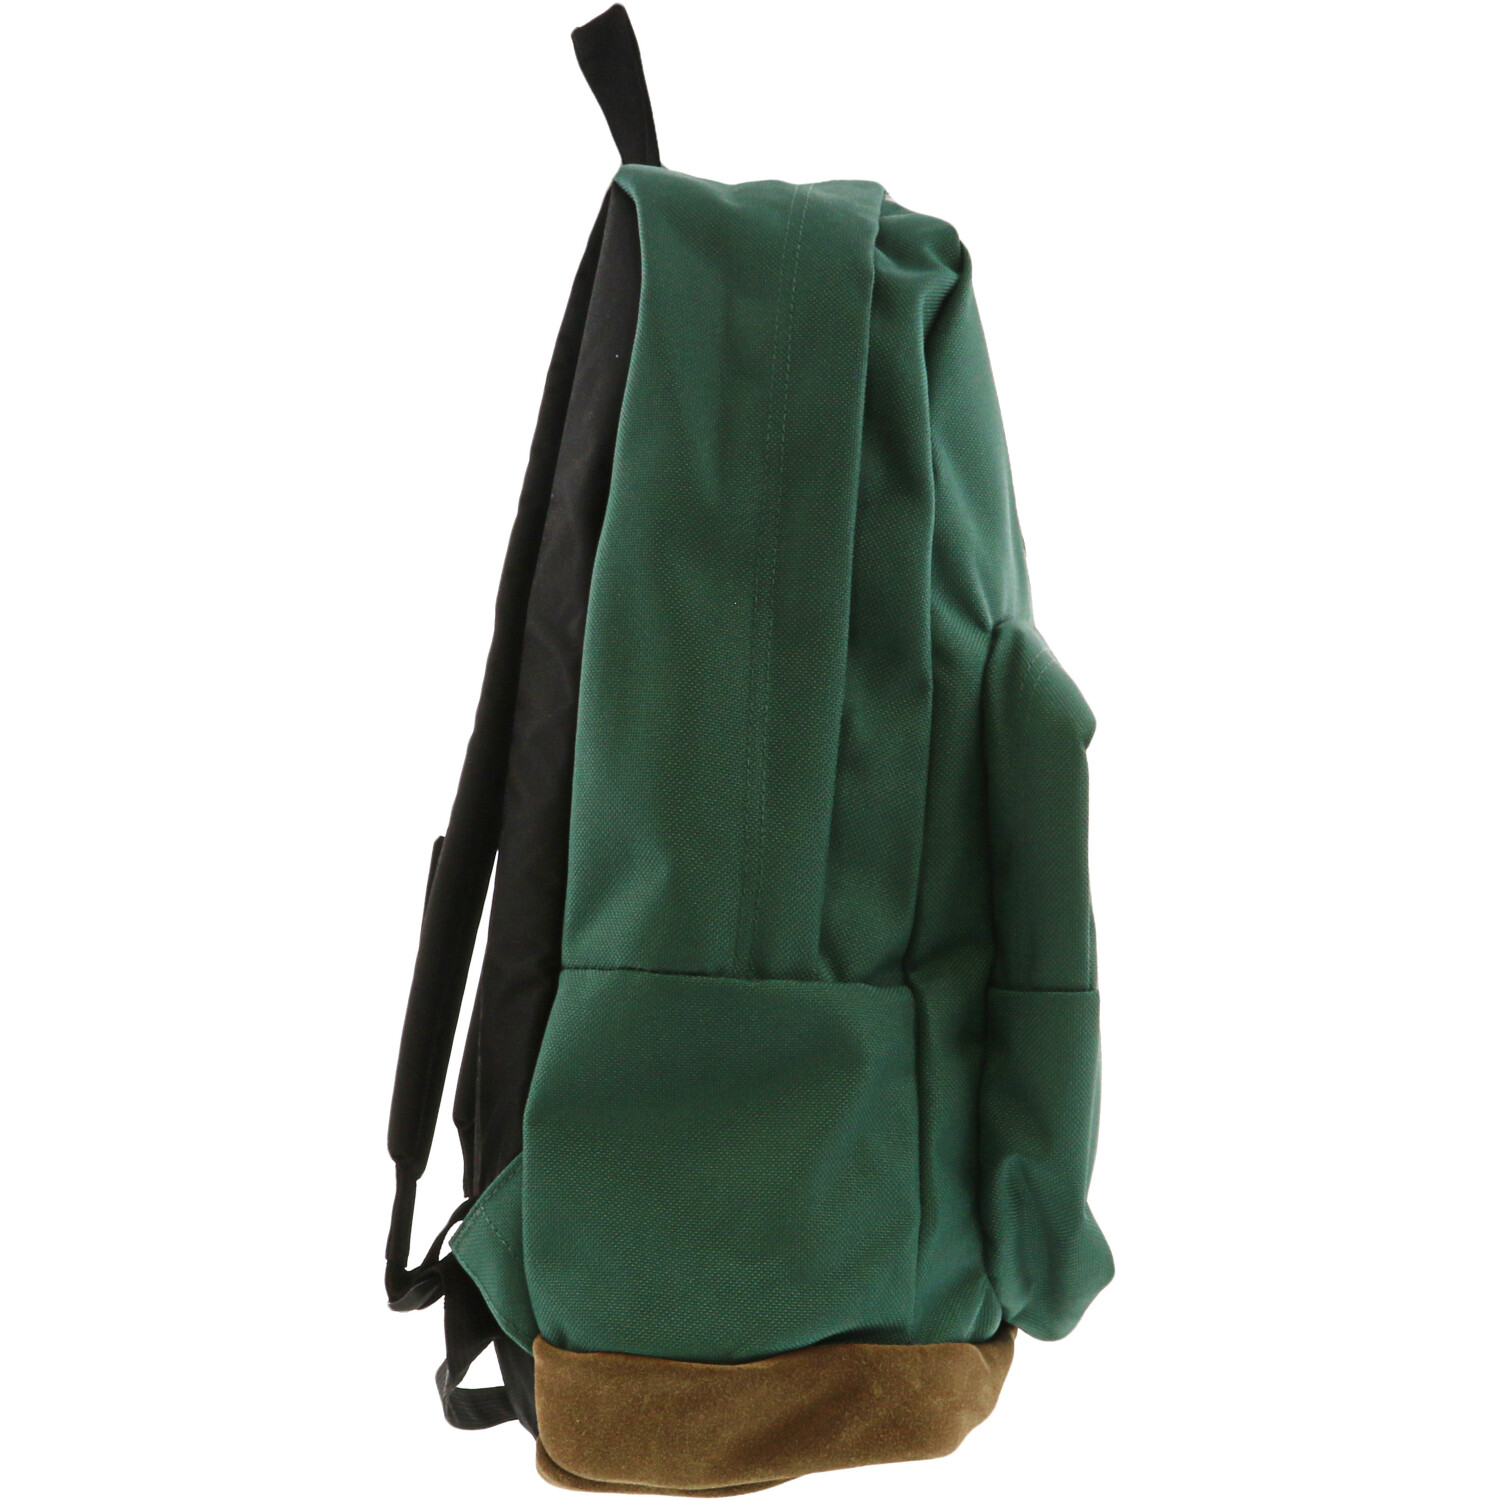 Jansport Men's Right Pack Polyester Backpack - Blue Spruce Green - image 2 of 3